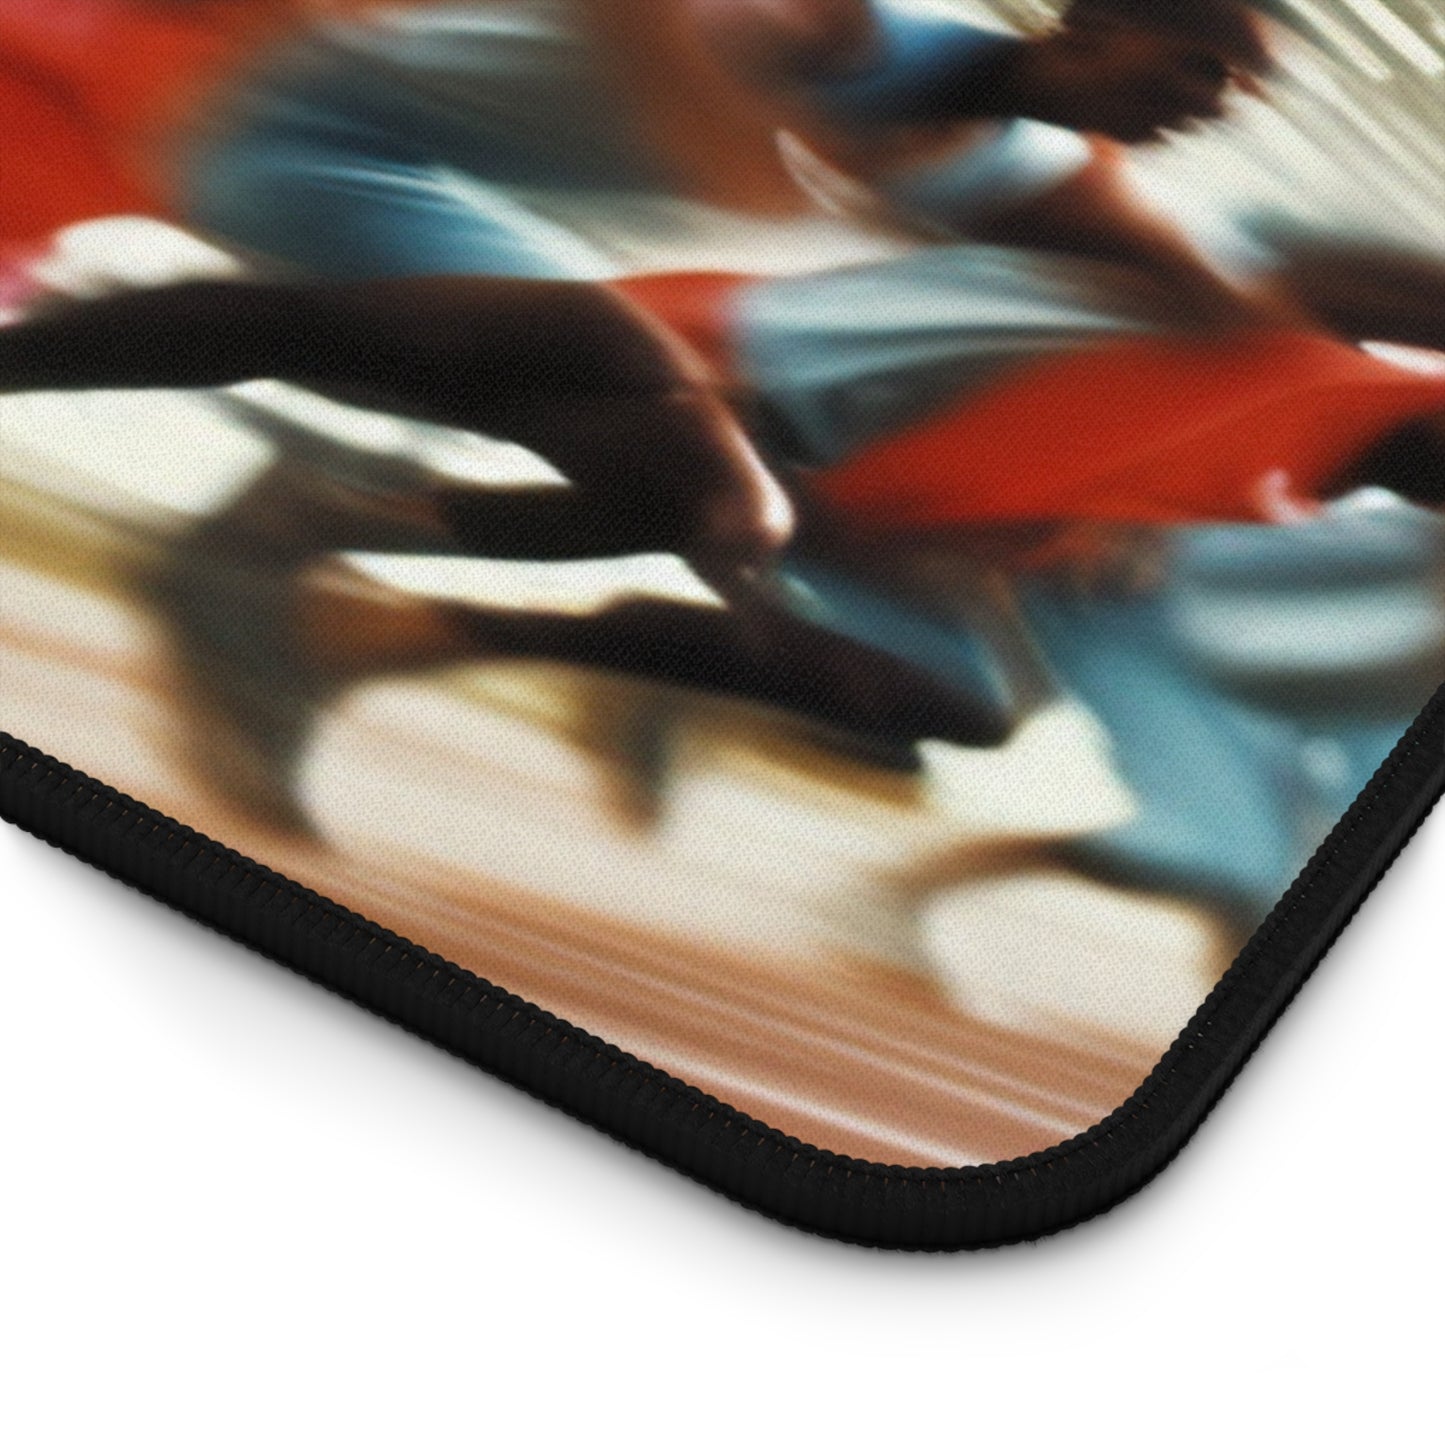 FFG x Rolled/Runners “Ready, Set, Go” Desk Mat